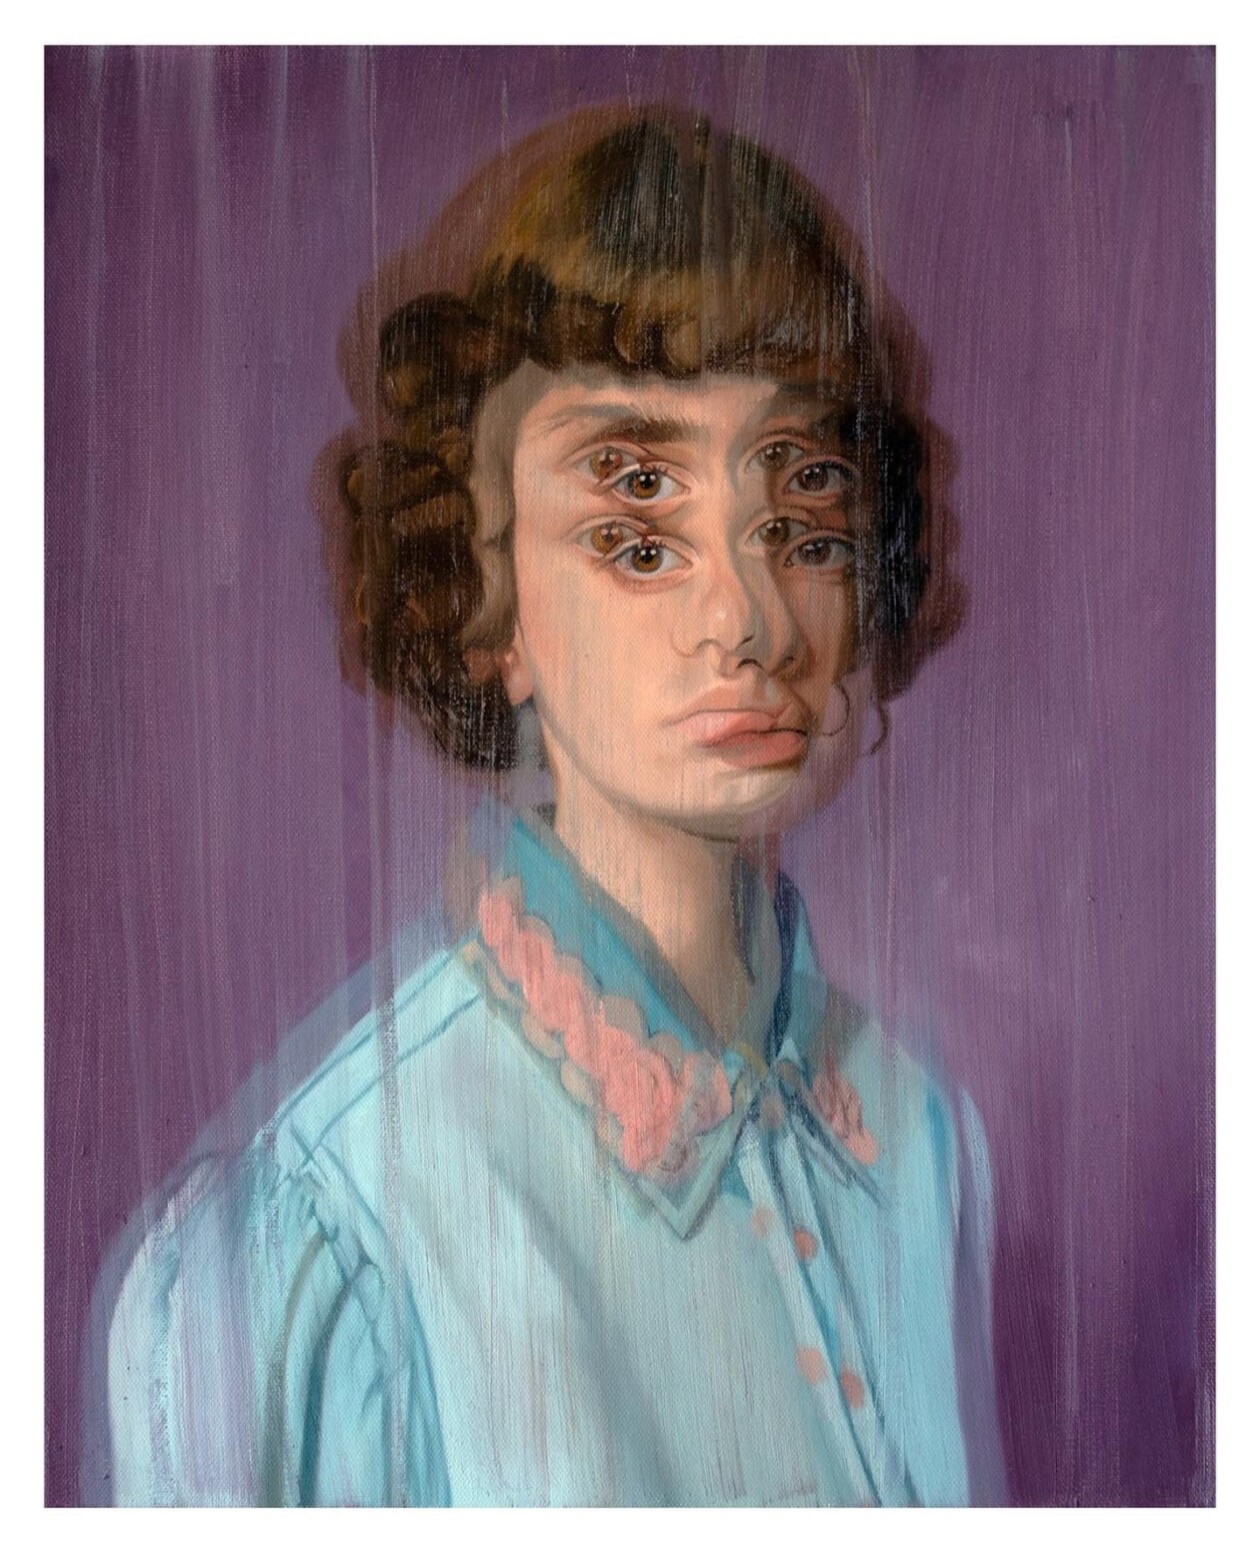 Alex Garant Overlaps Repeated Female Figures To Create Unique And Hypnotizing Portrait Paintings (10)